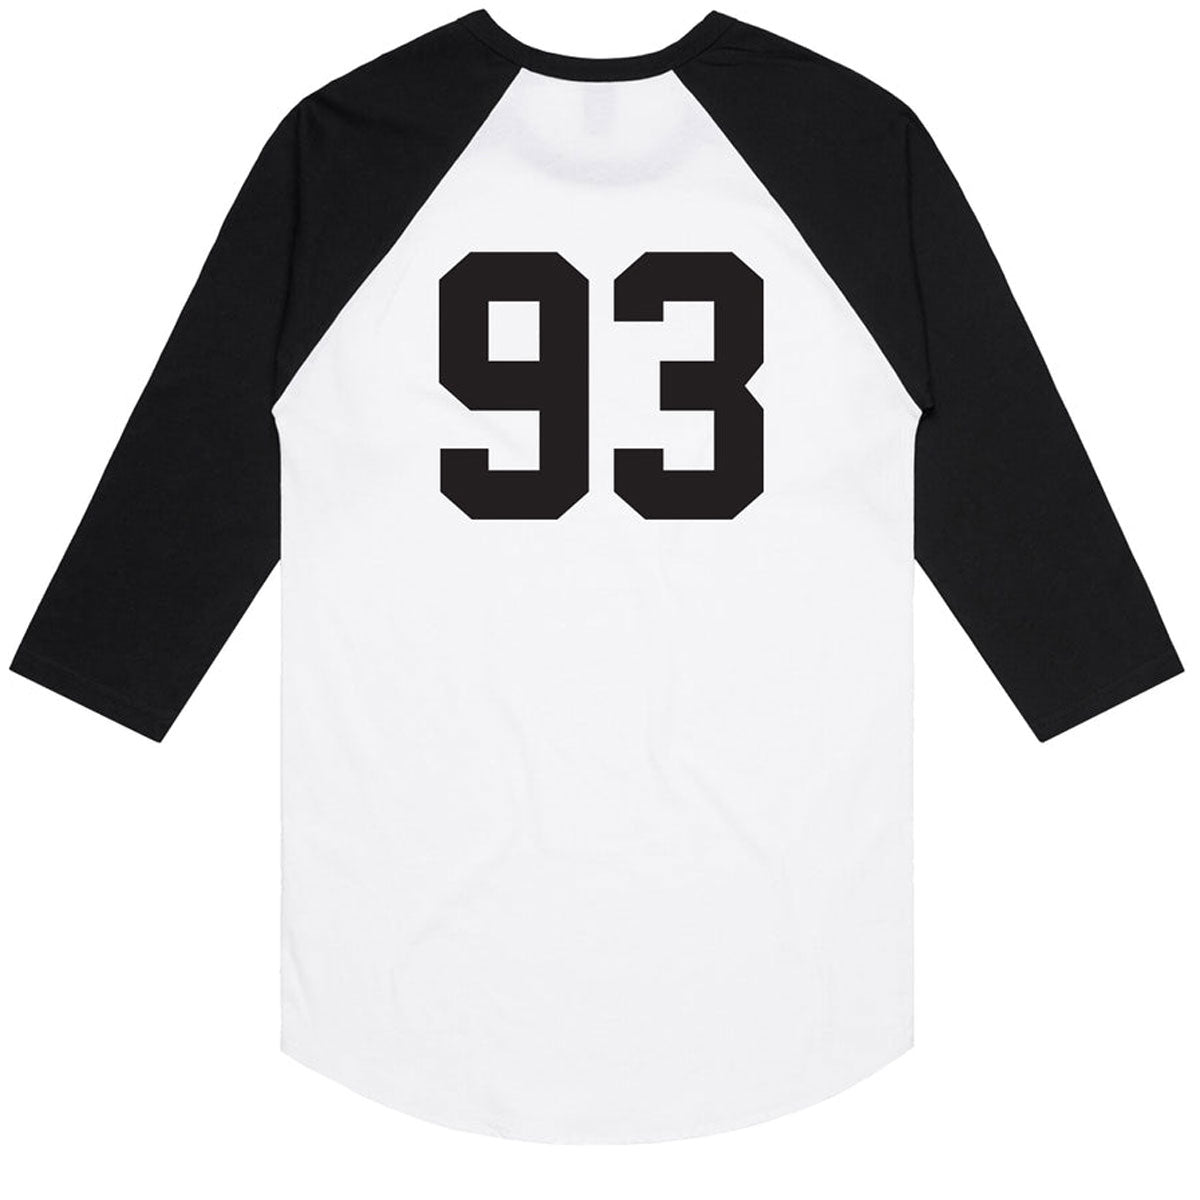 Girl Team Raglan T-Shirt - White/Black image 2